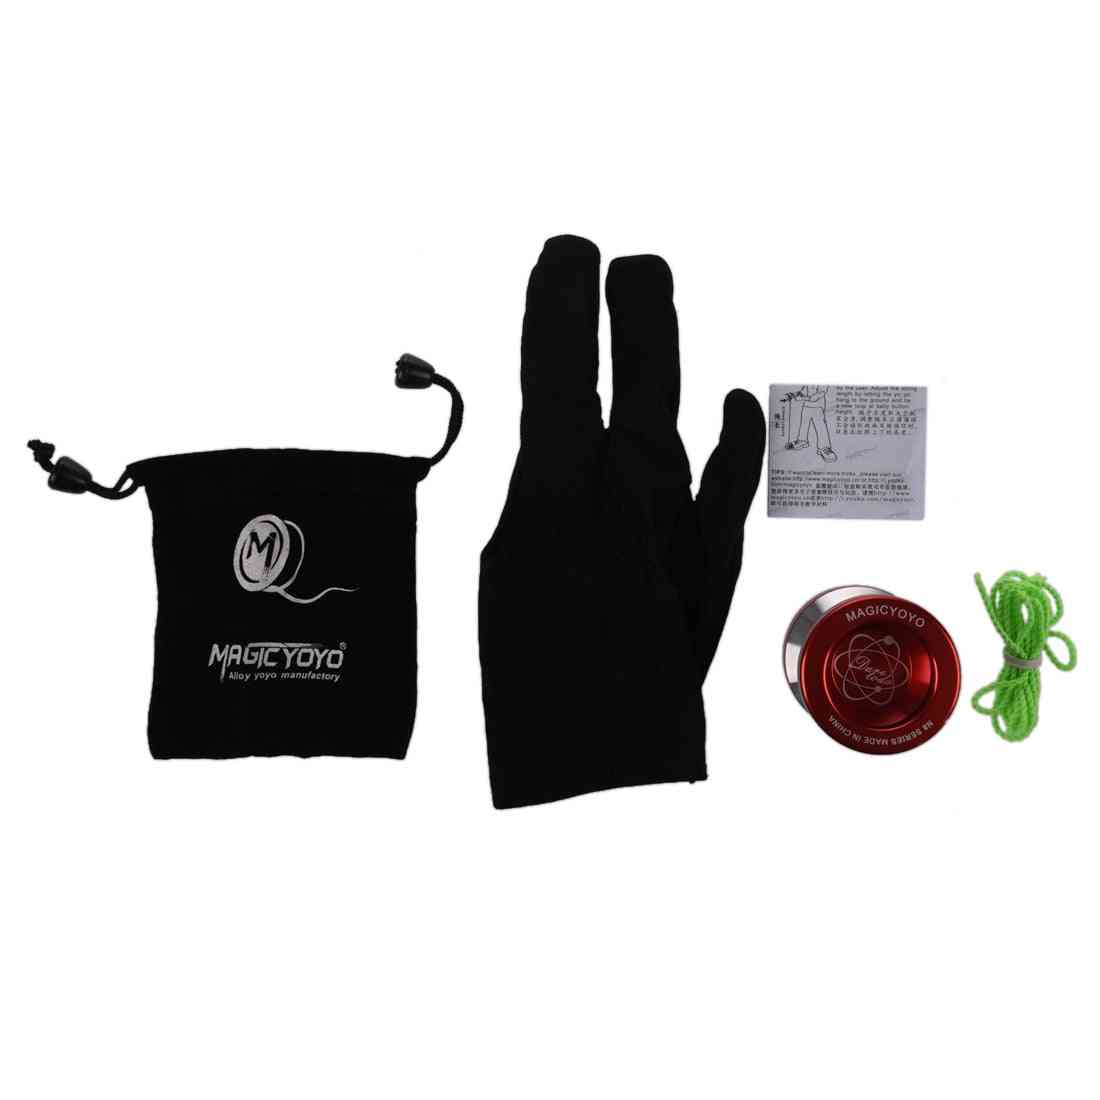 New Magic N8 Super Professional Yoyo + String + Free Bag +free Glove